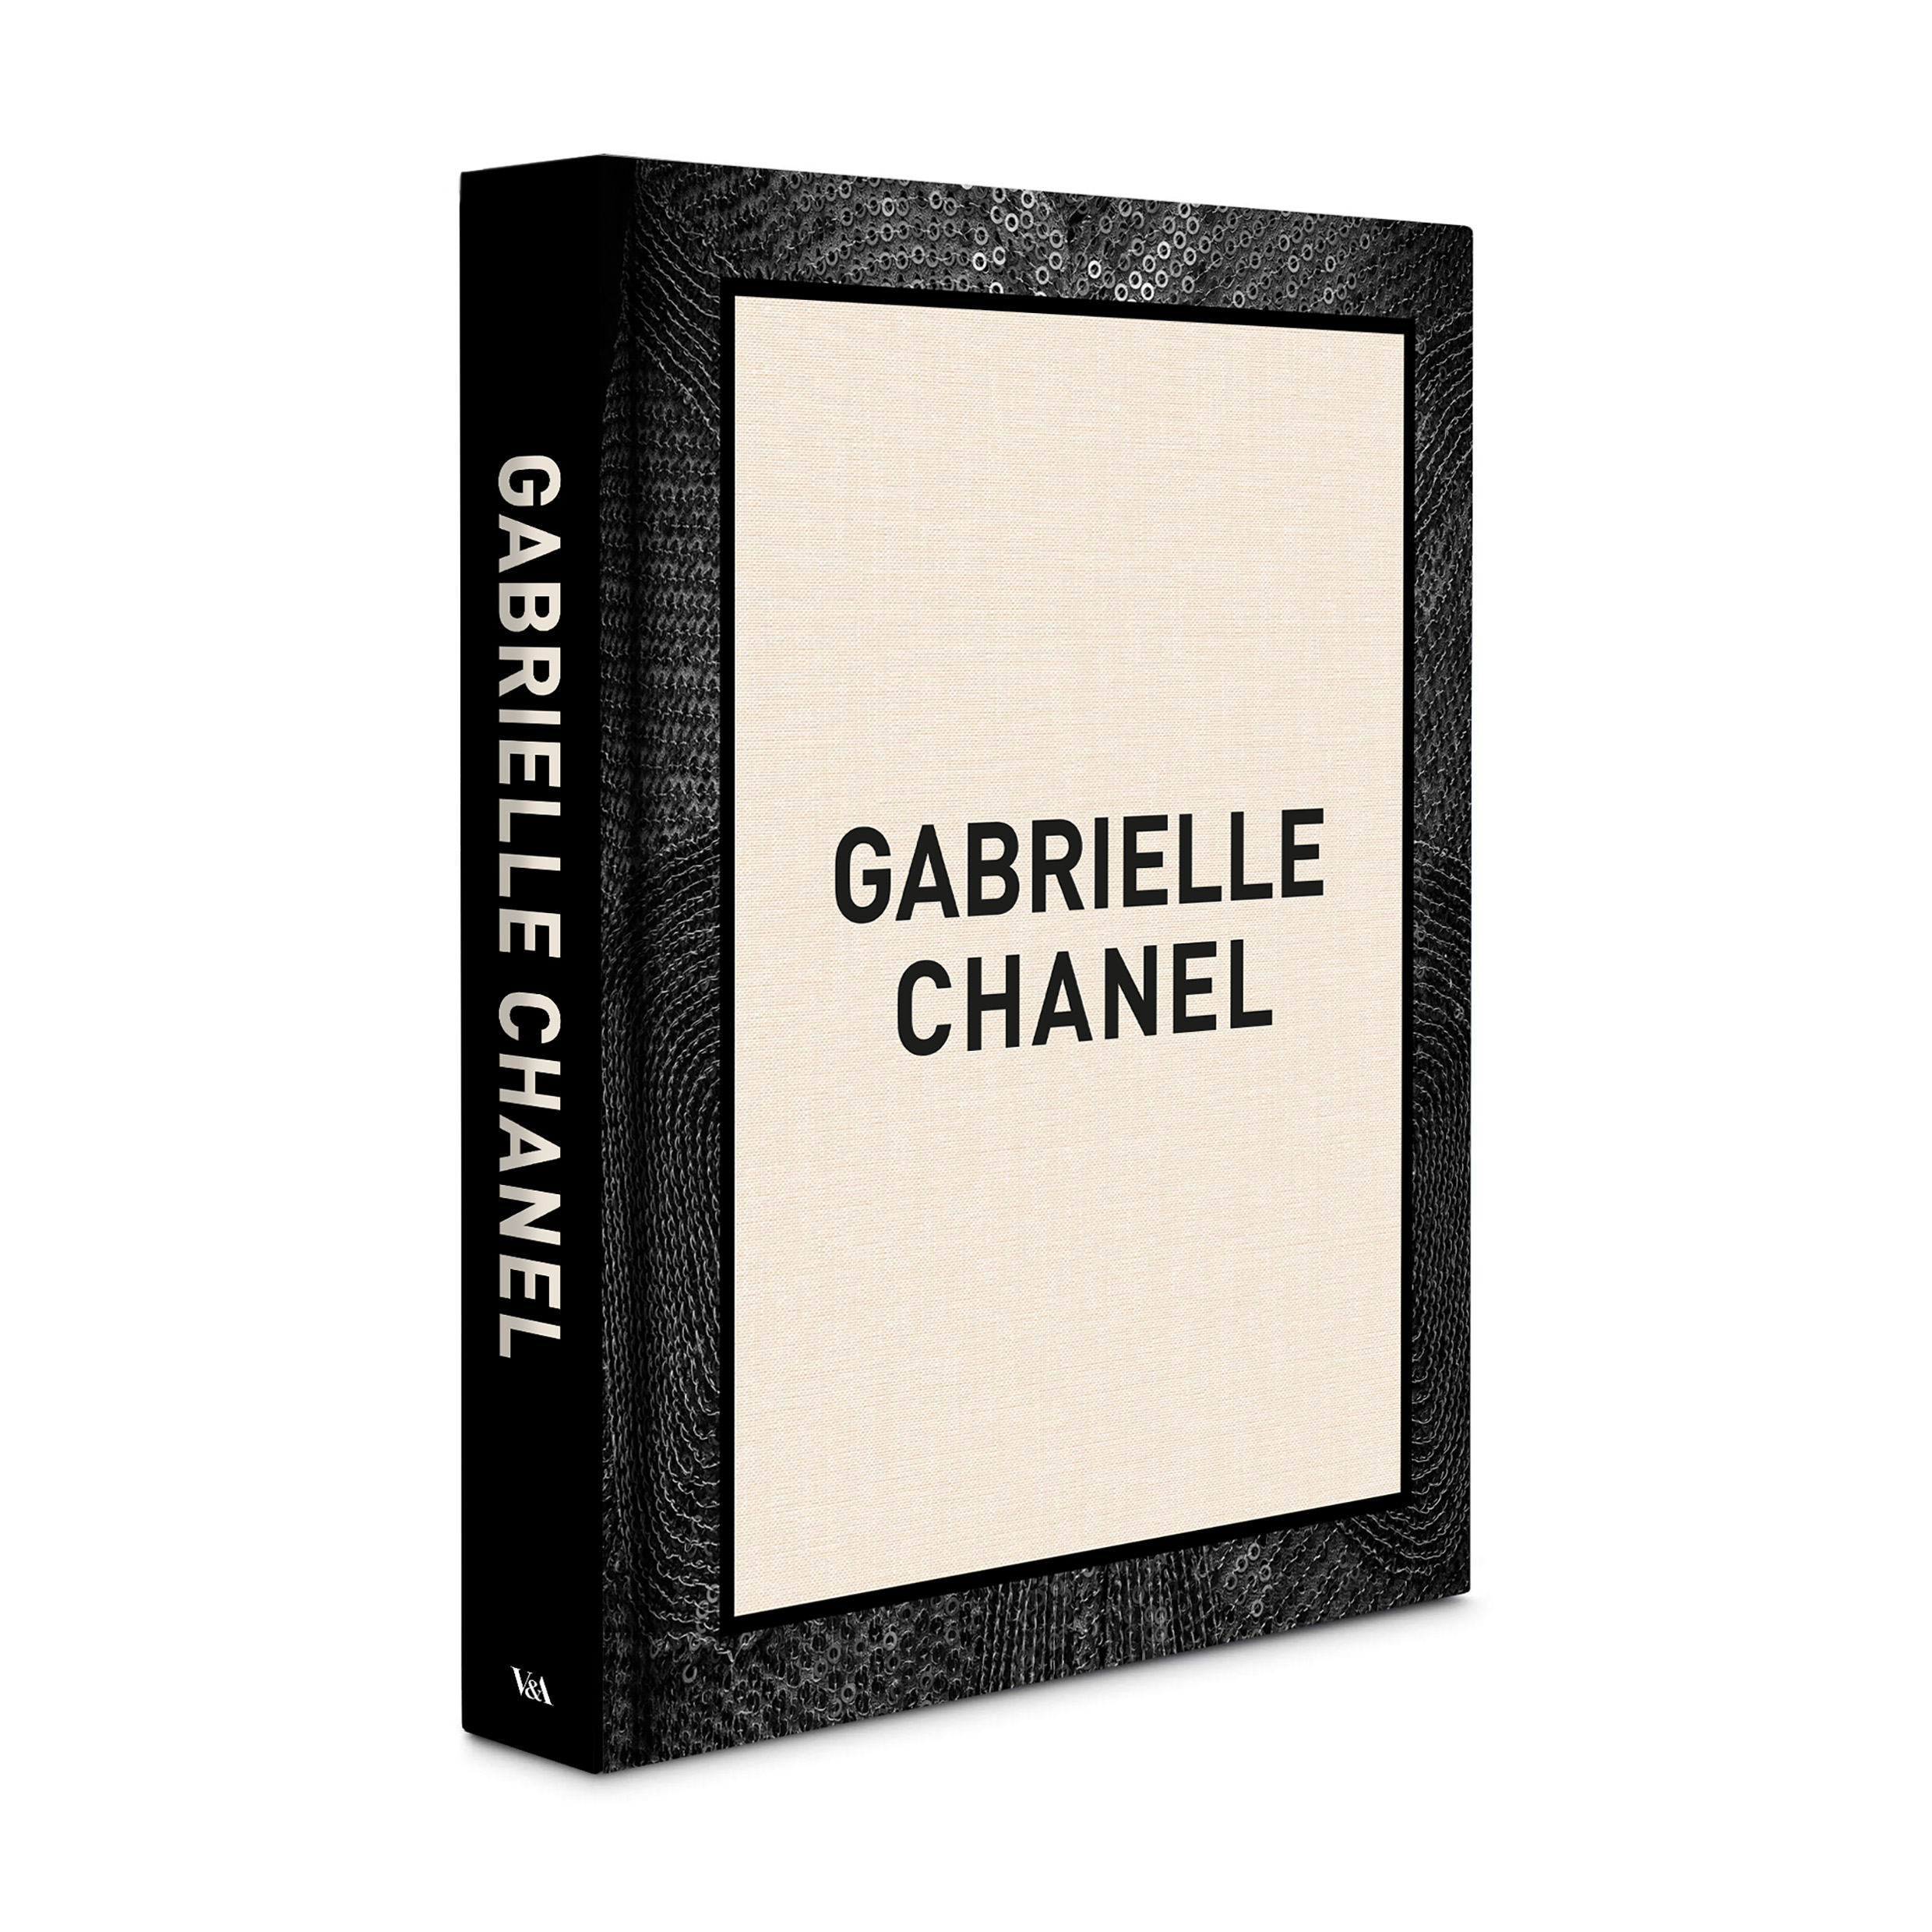 V&A Gabrielle Chanel exhibition book